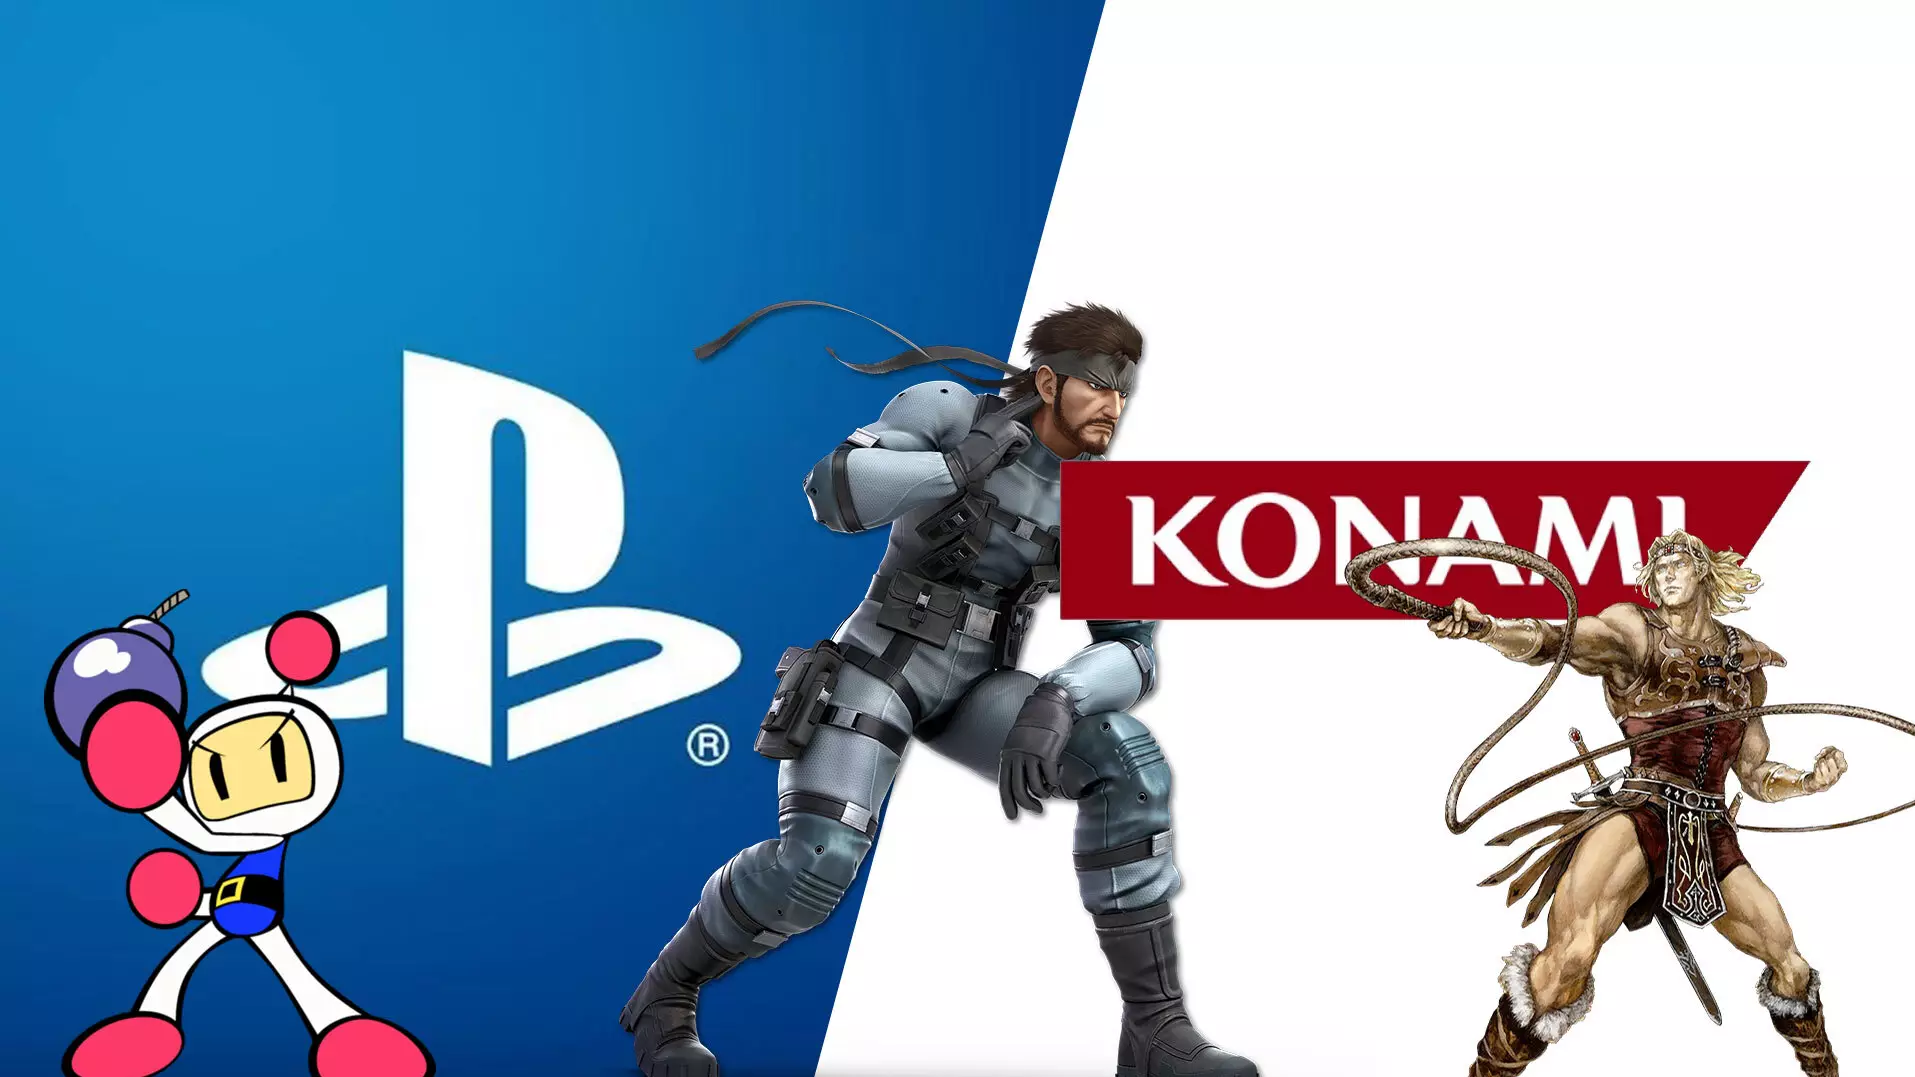 PlayStation Asked To Buy Konami, As Response To Microsoft’s Bethesda Purchase